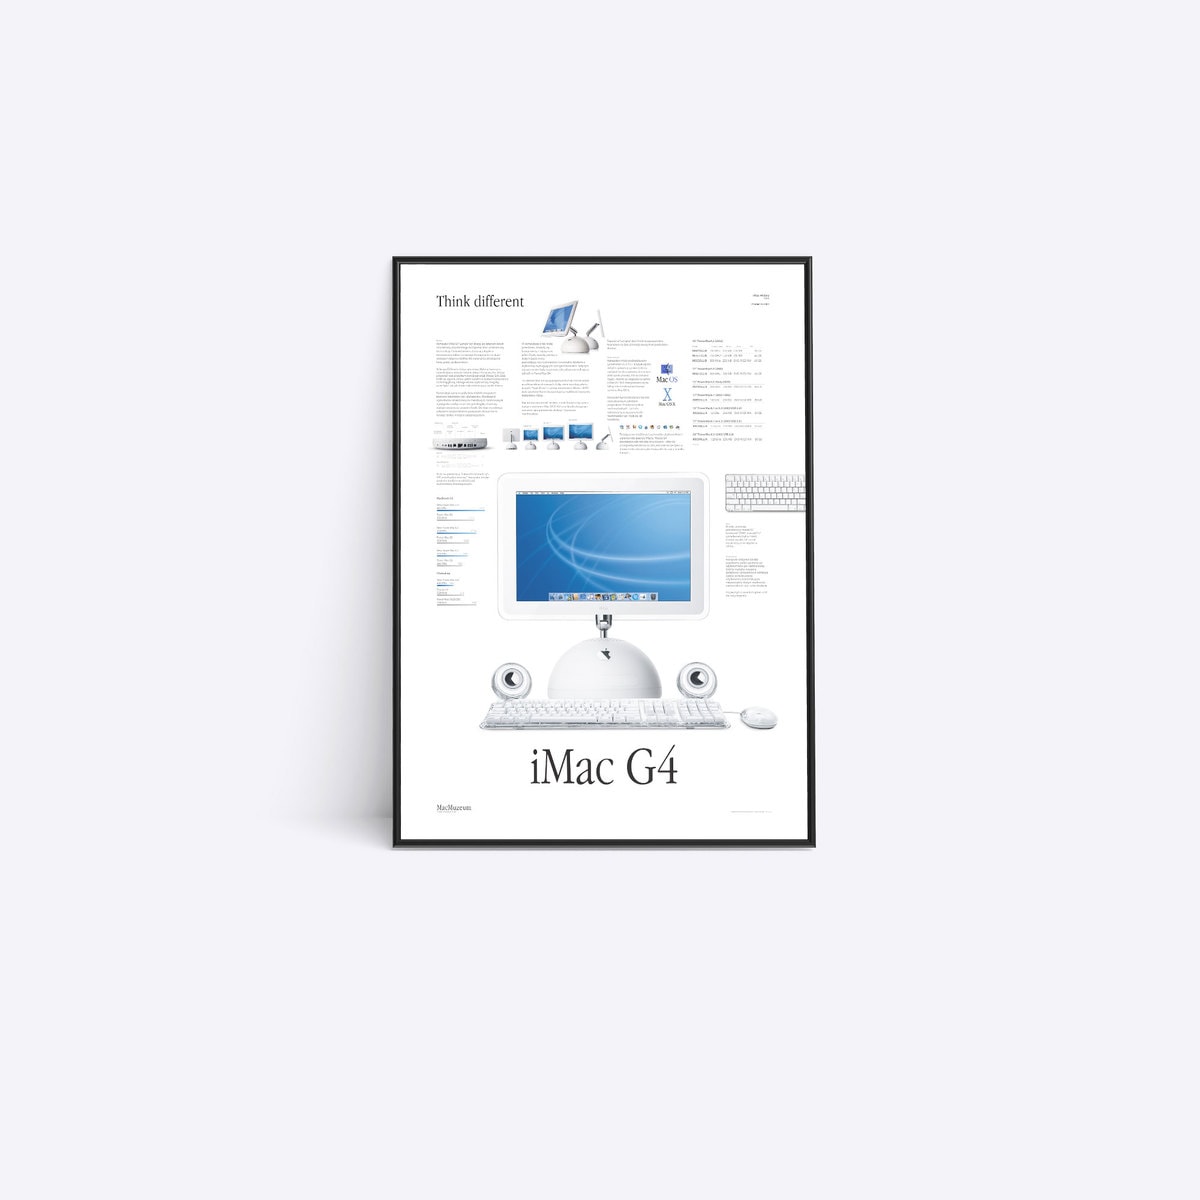 iMac G4 infographic